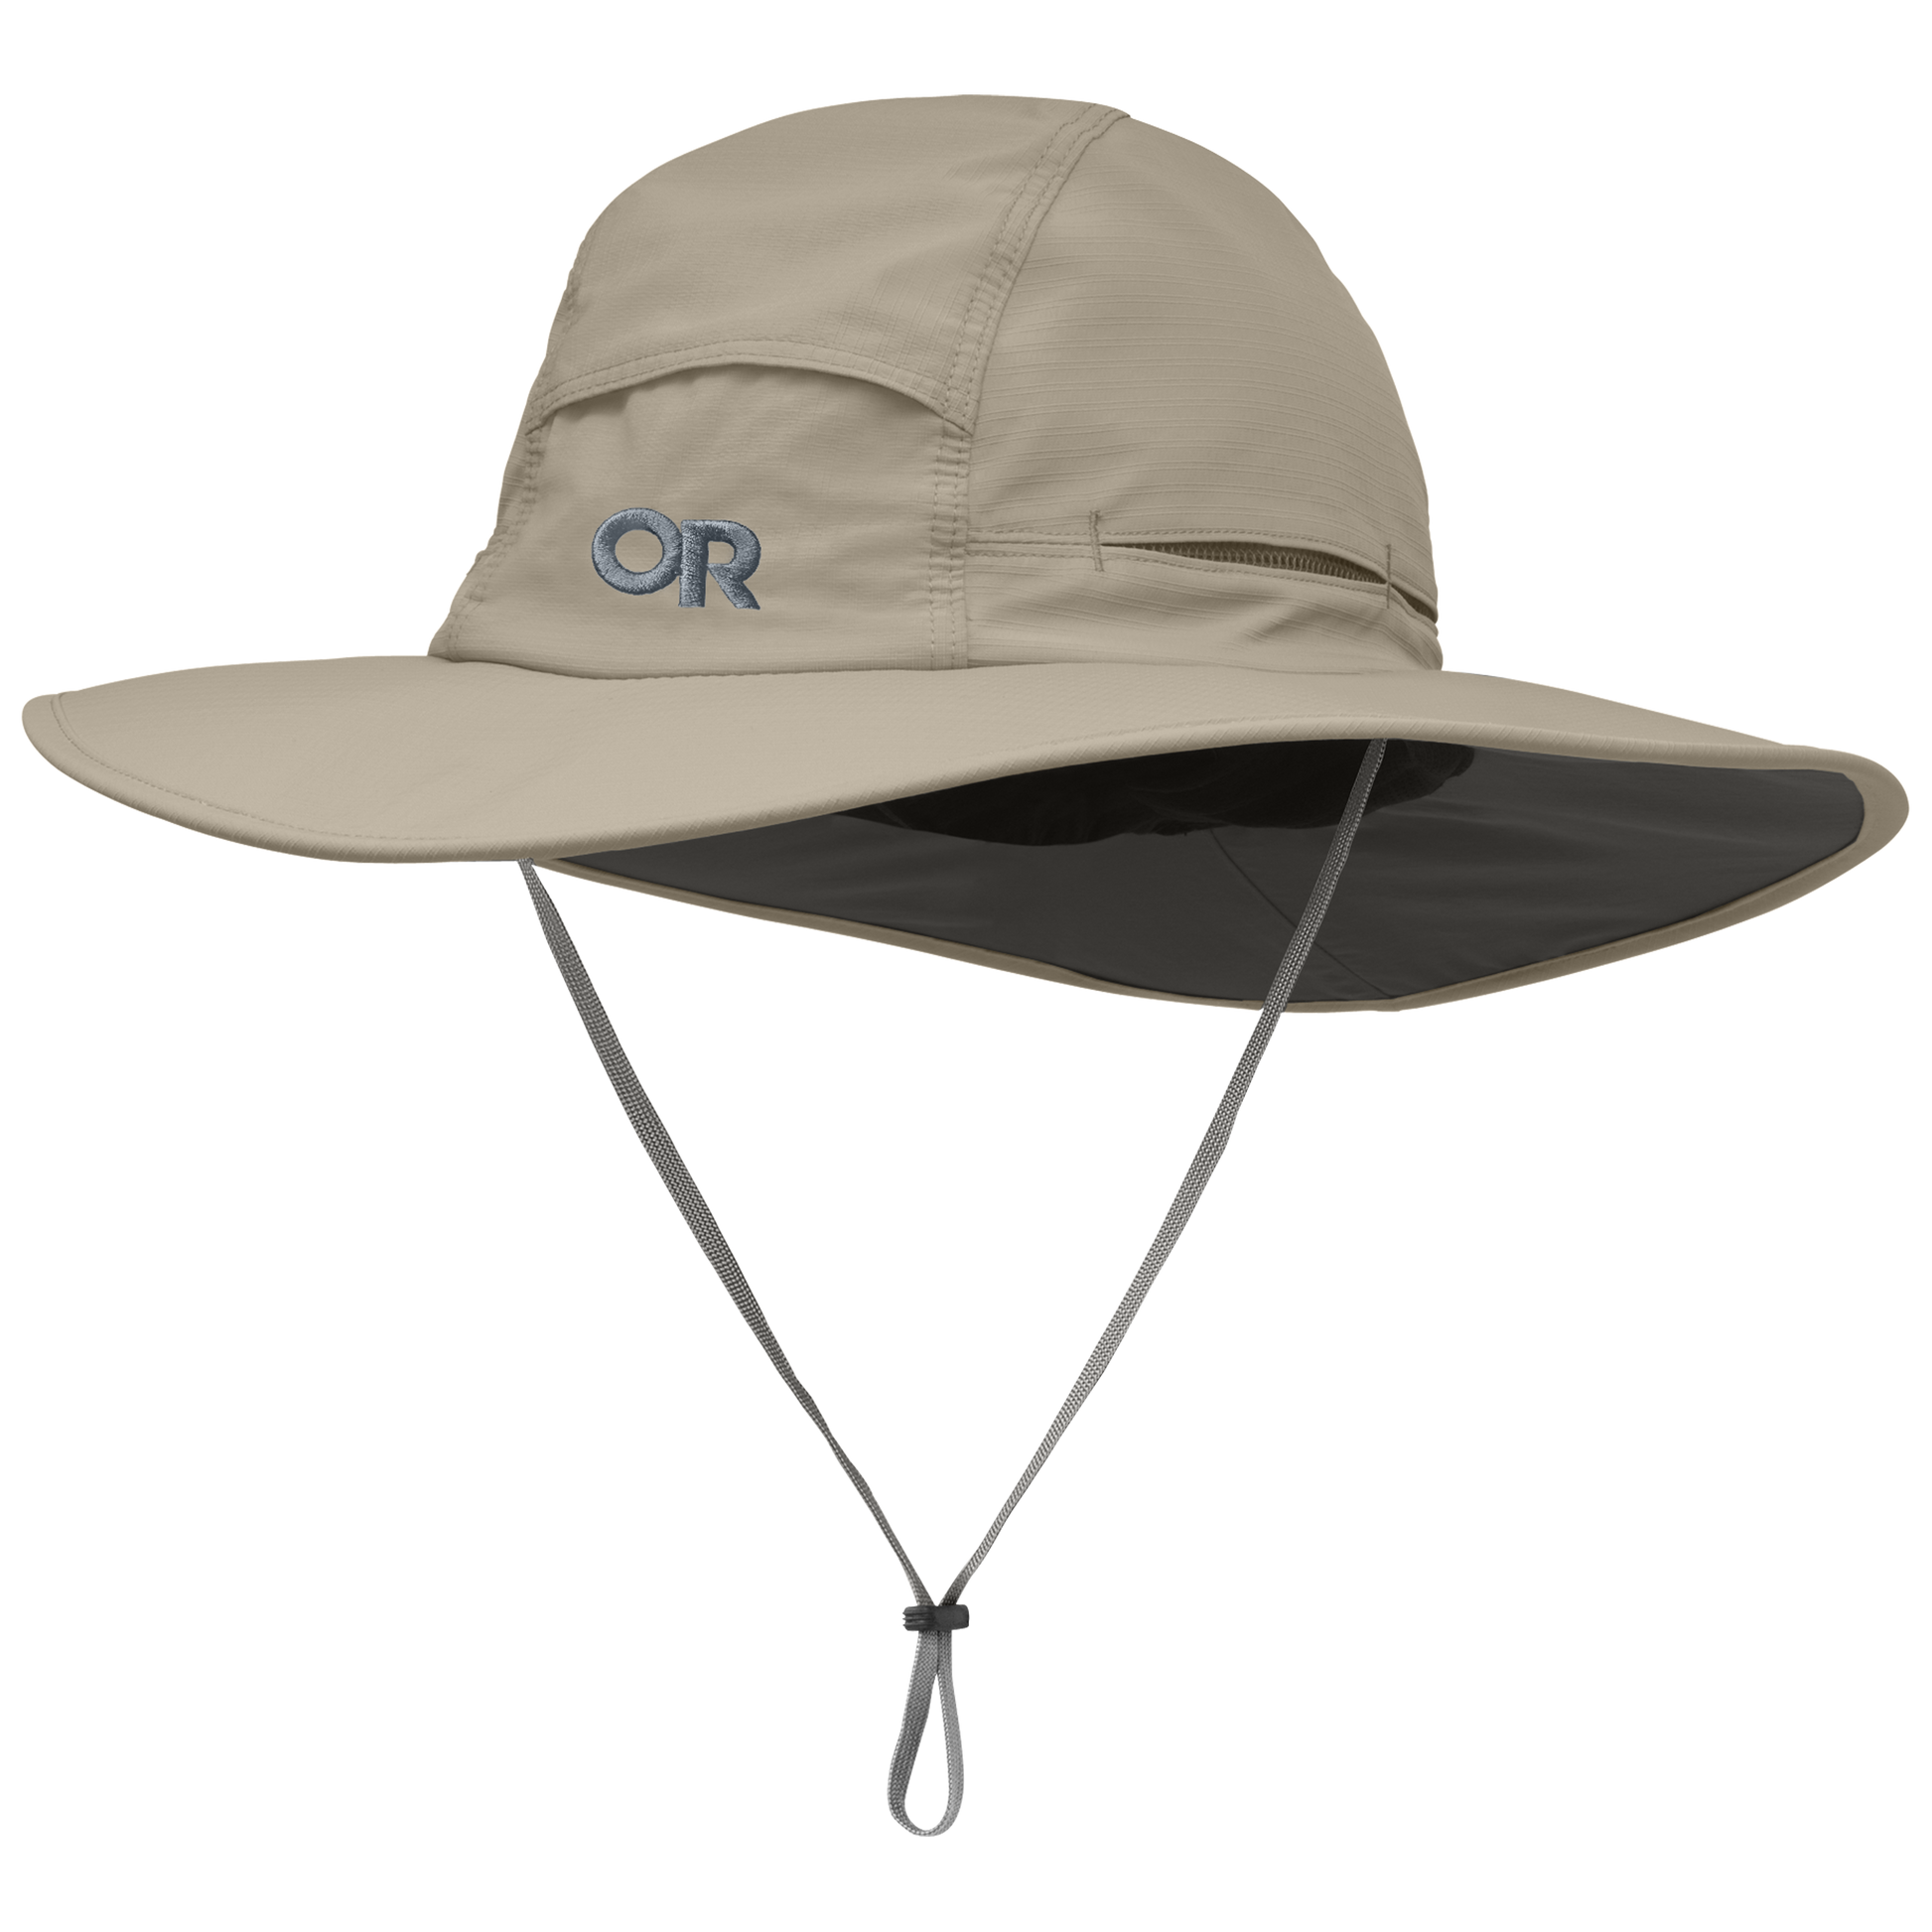 Outdoor Research Sombriolet Sun Hat (Khaki)